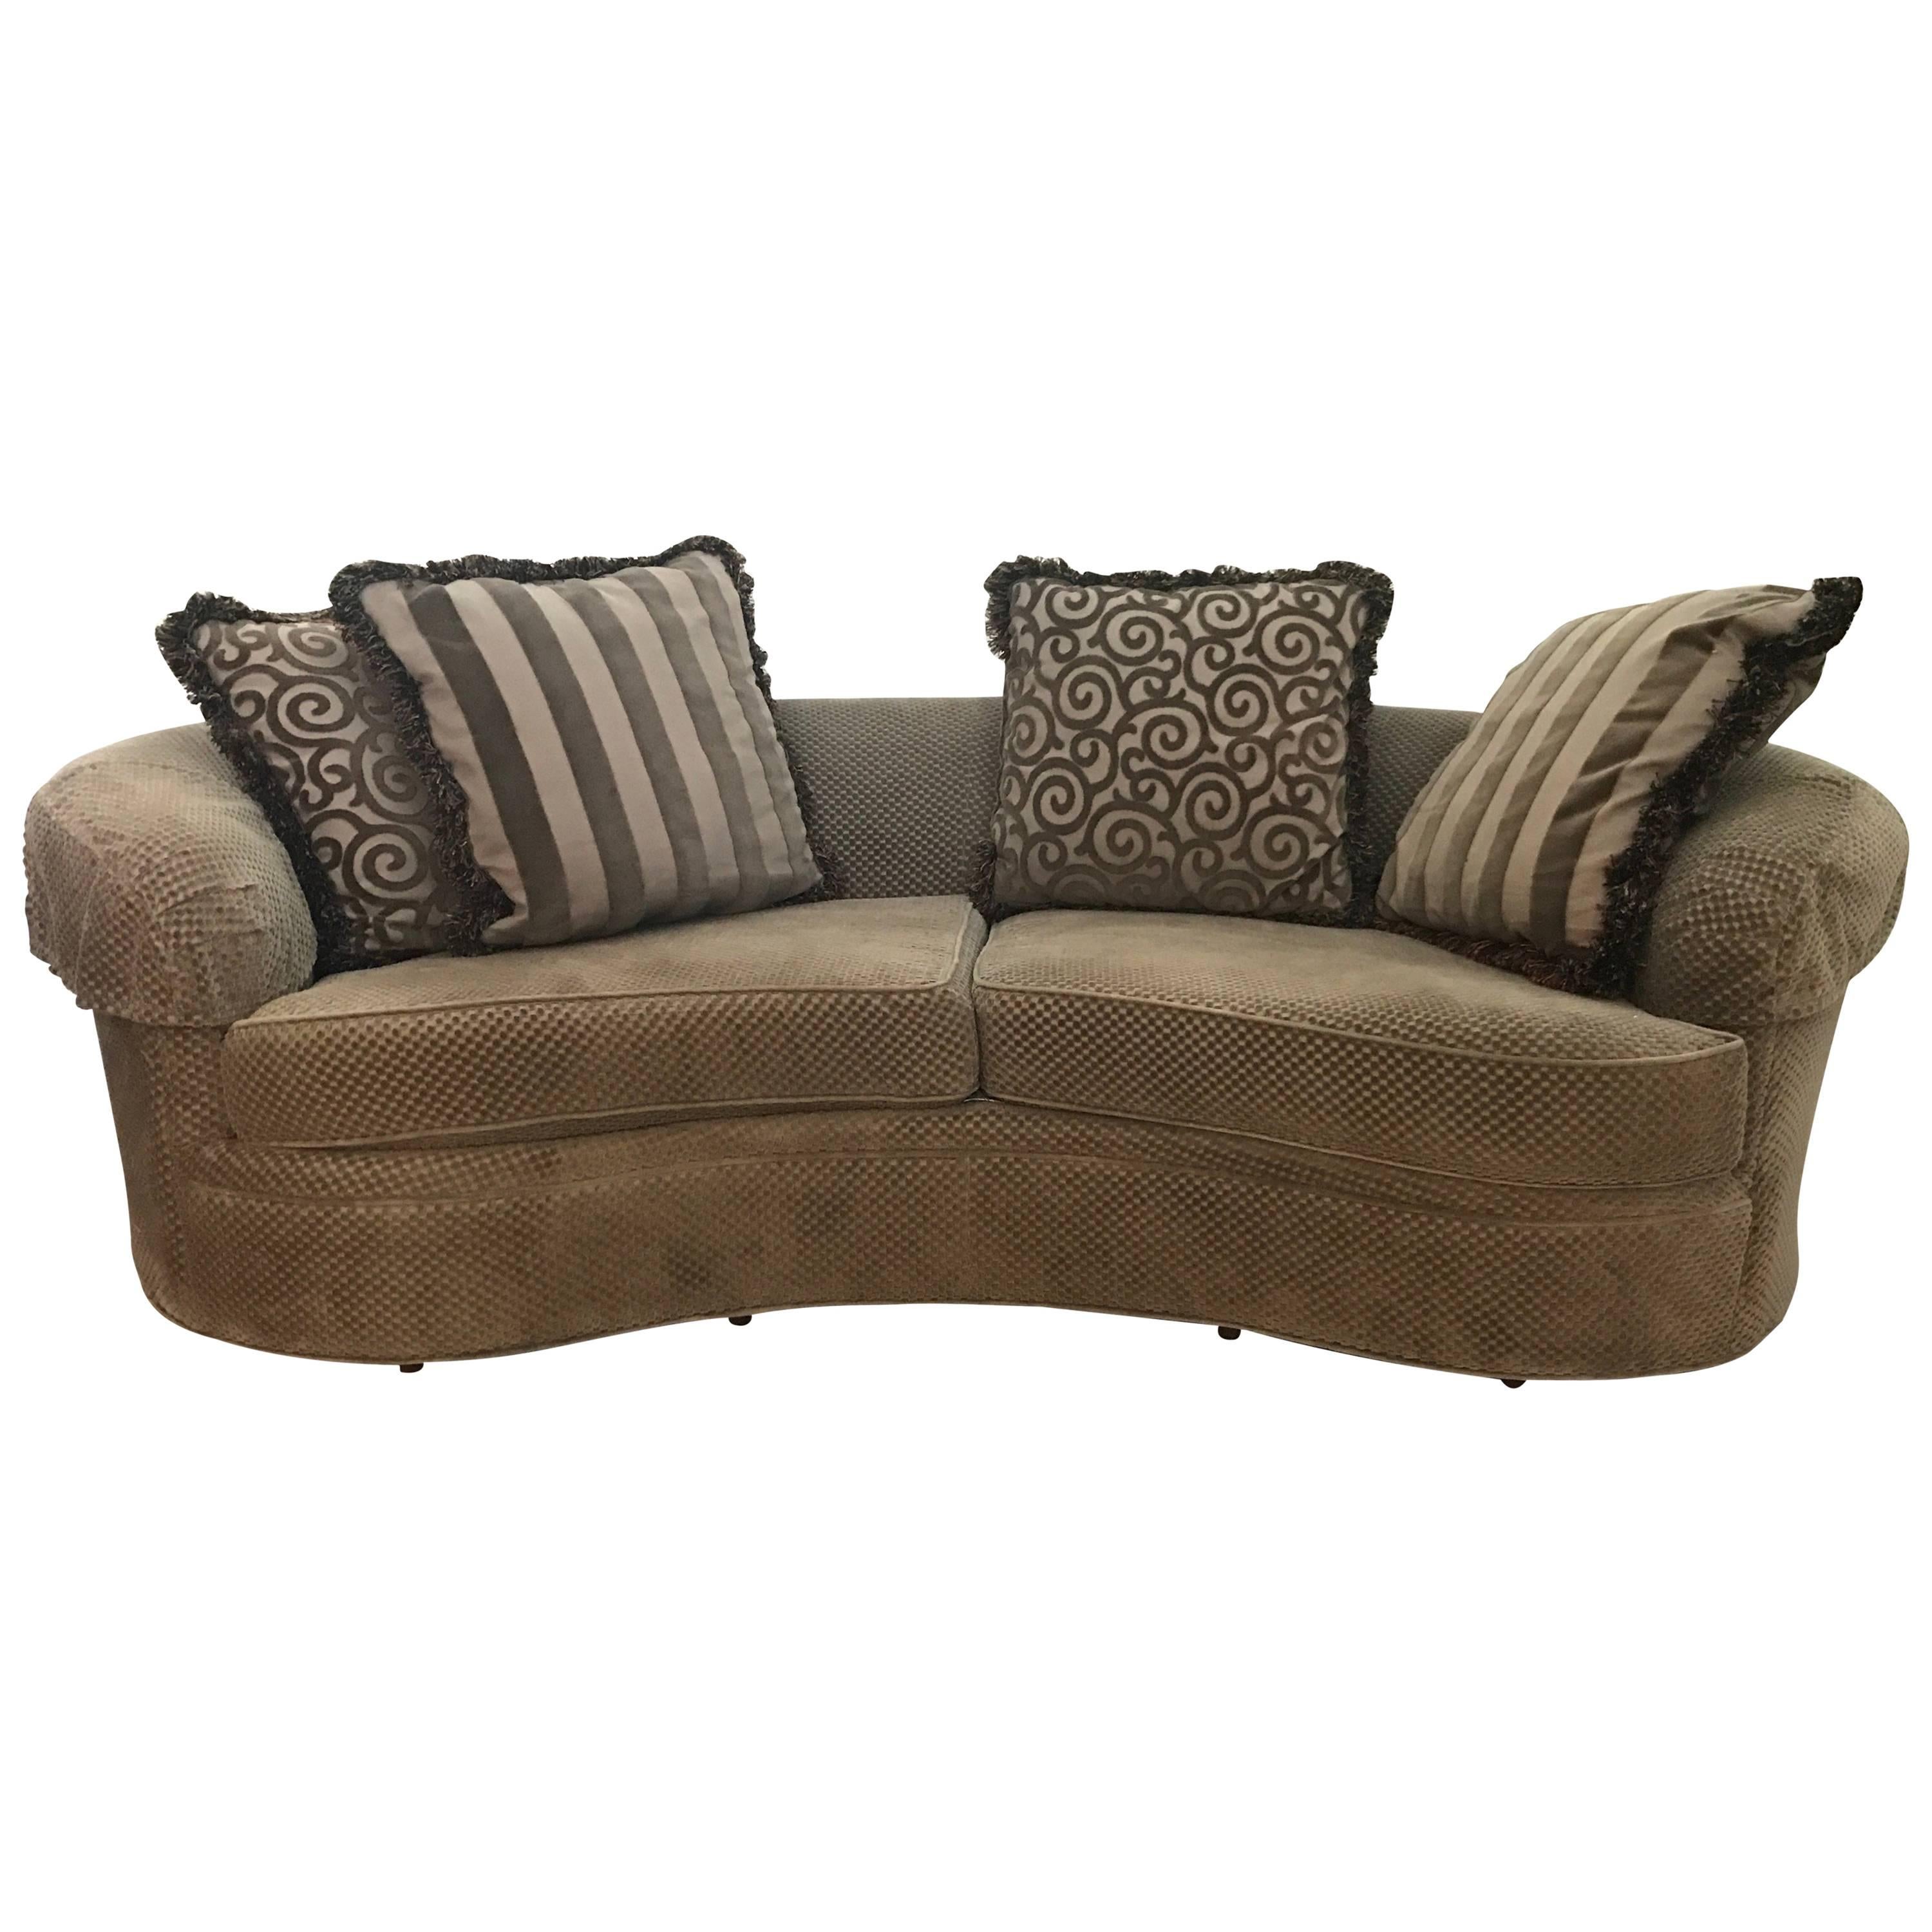 Mid-Century Modern Kidney Shape Biomorphic sofa- luxurious comfort and style, circa 1970.
                                                                              
Mid Century Vladimir Kagan Sumptuous comfy sofa-tight back, two-seat cushions,